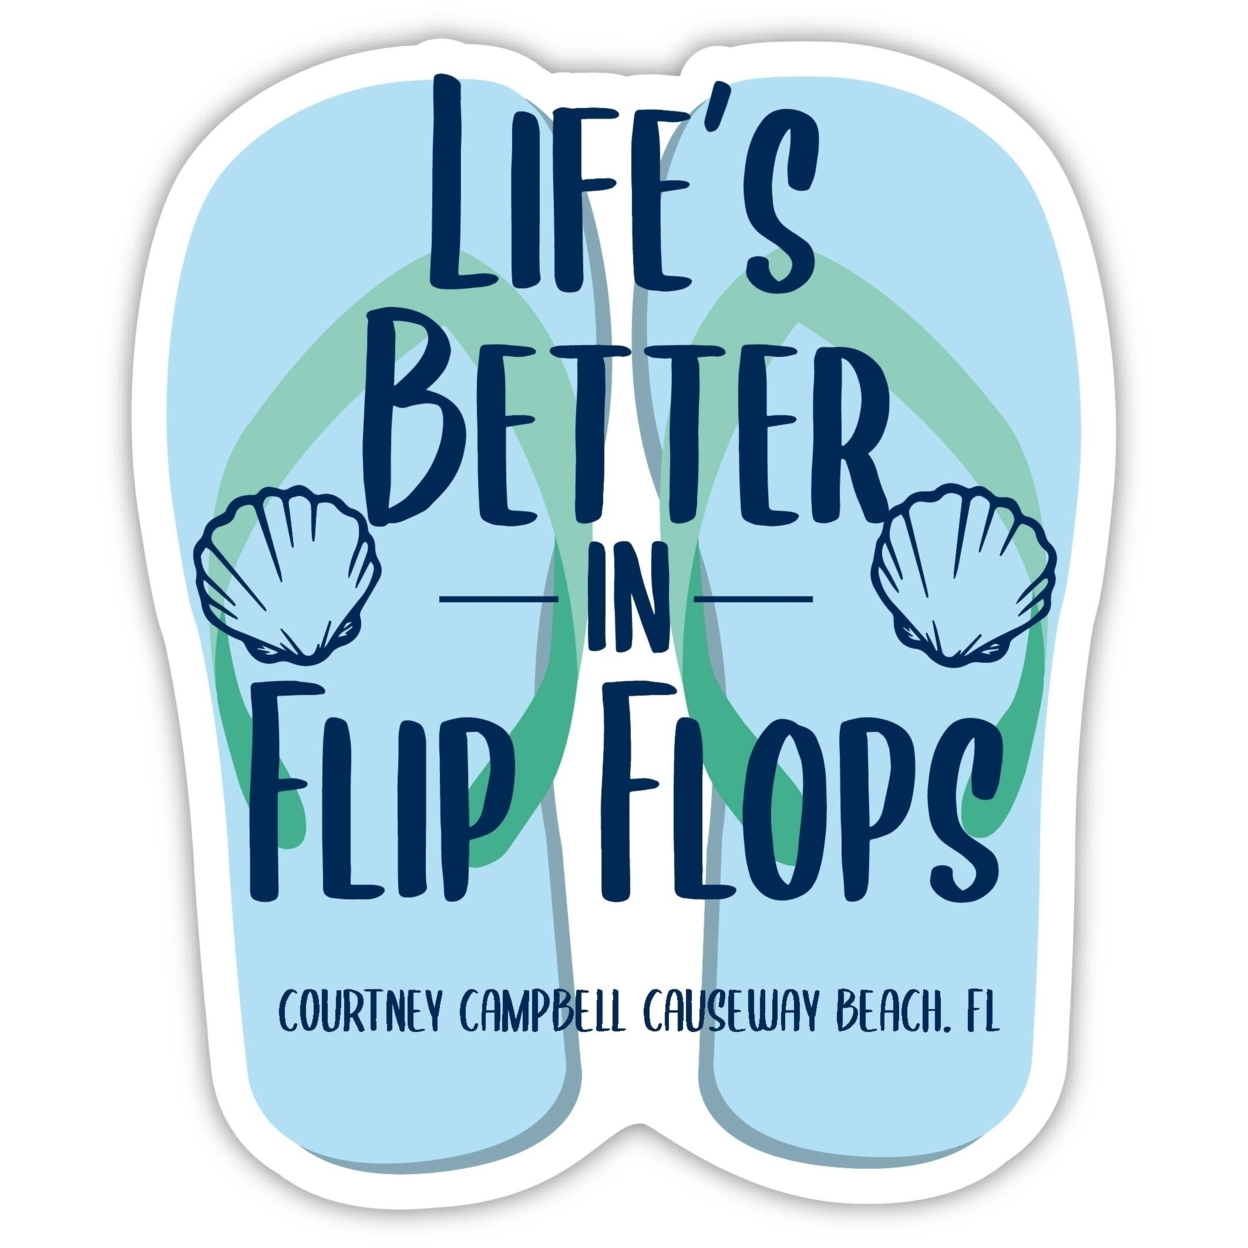 Courtney Campbell Causeway Beach Florida Souvenir 4 Inch Vinyl Decal Sticker Flip Flop Design